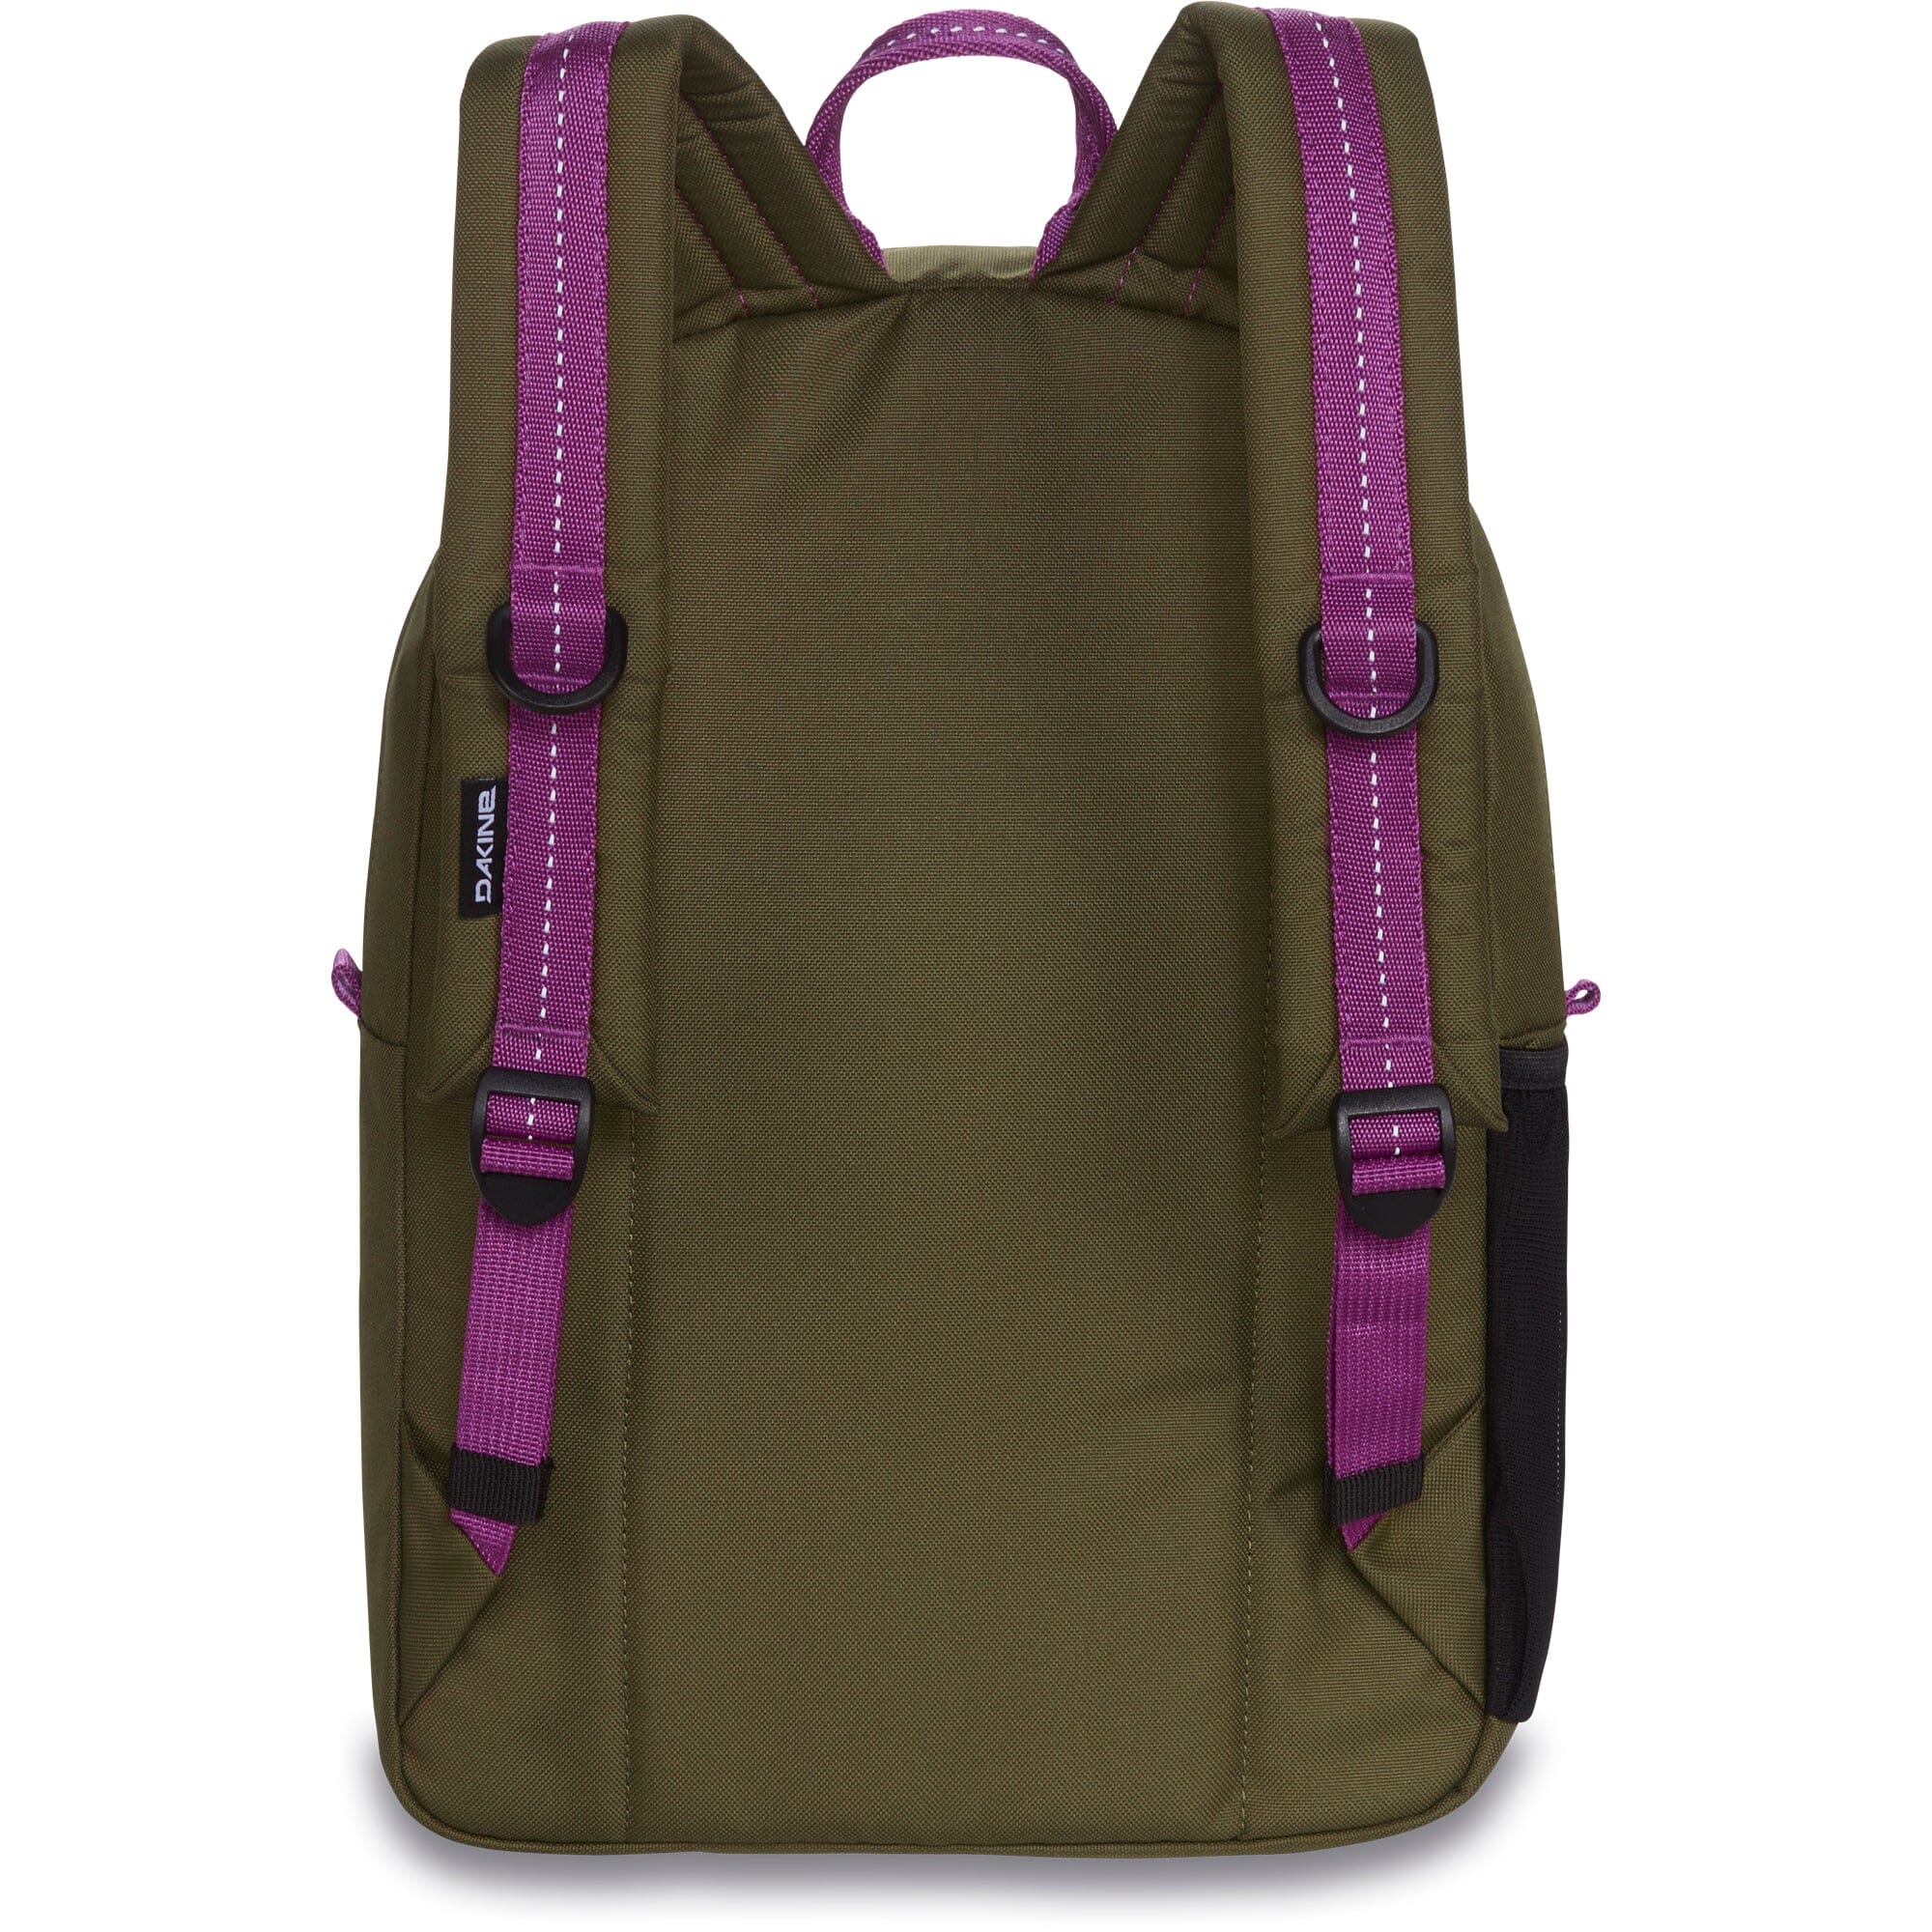 Backpacks for School, University and Work - Freeride Boardshop